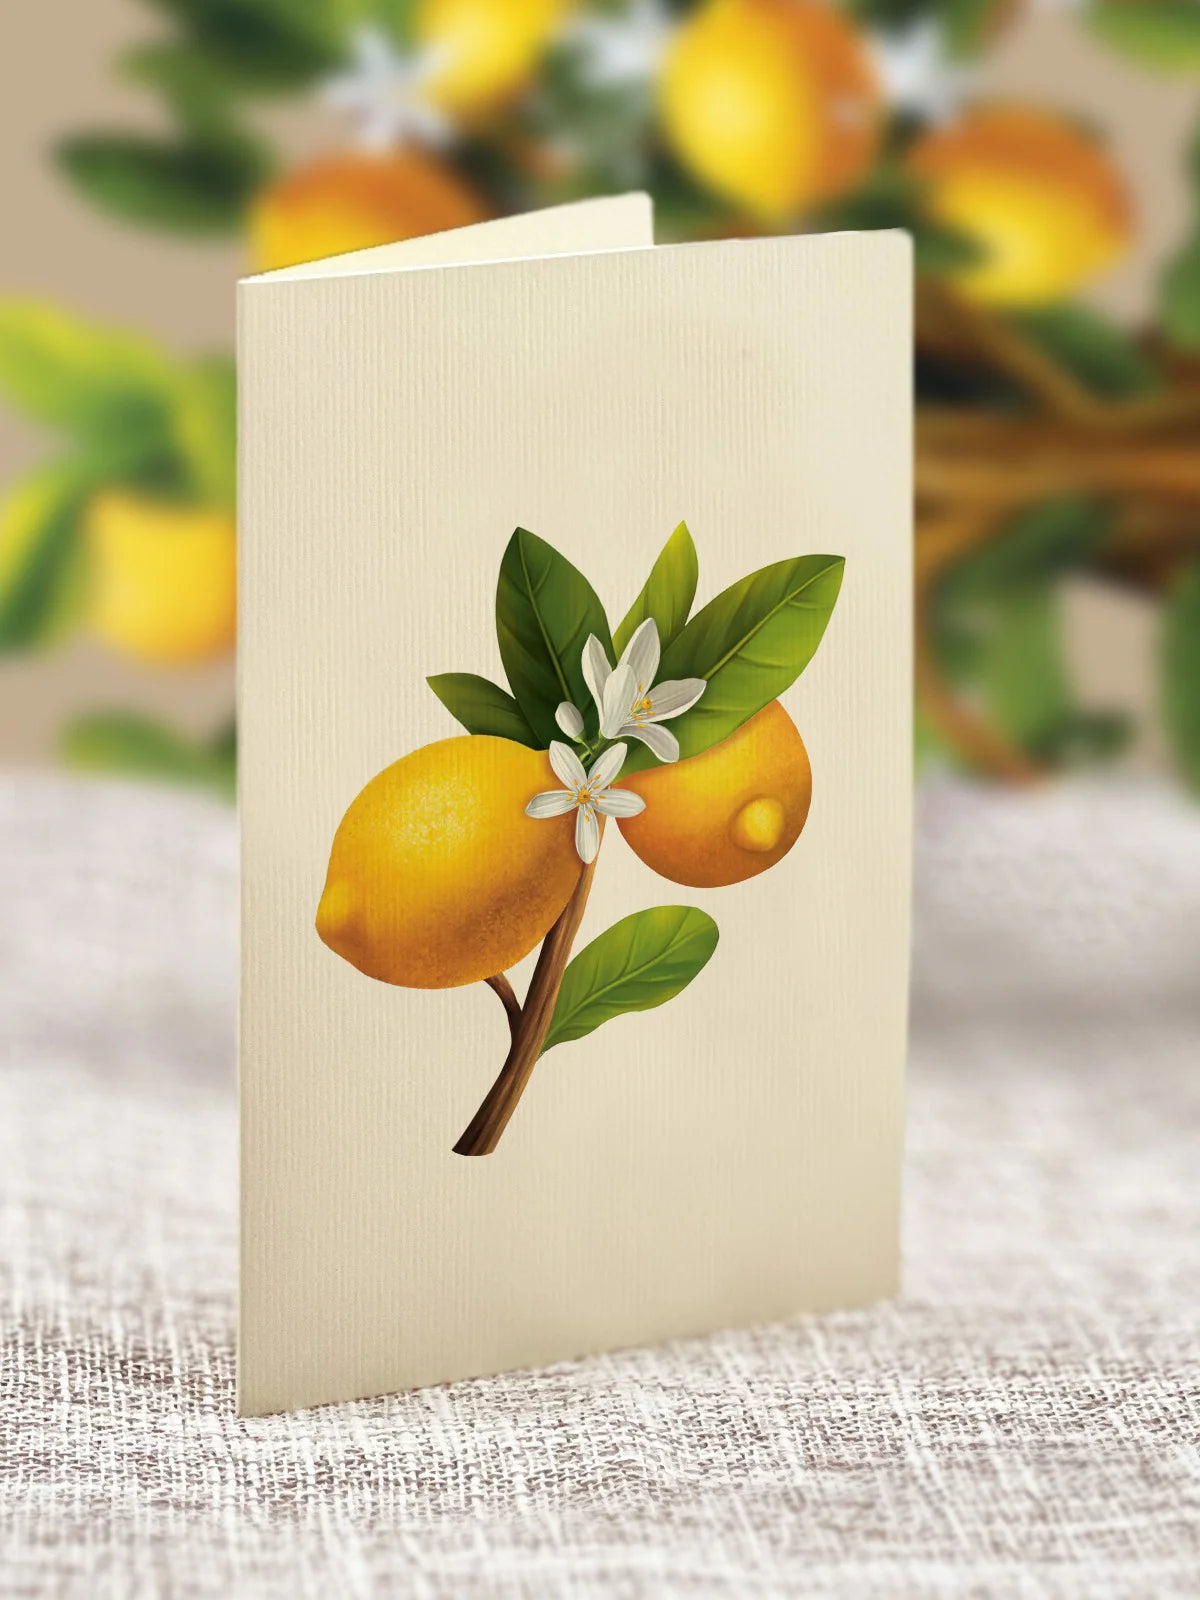 Lemon Blossom Tree Pop Up Flower Bouquet Greeting Card    